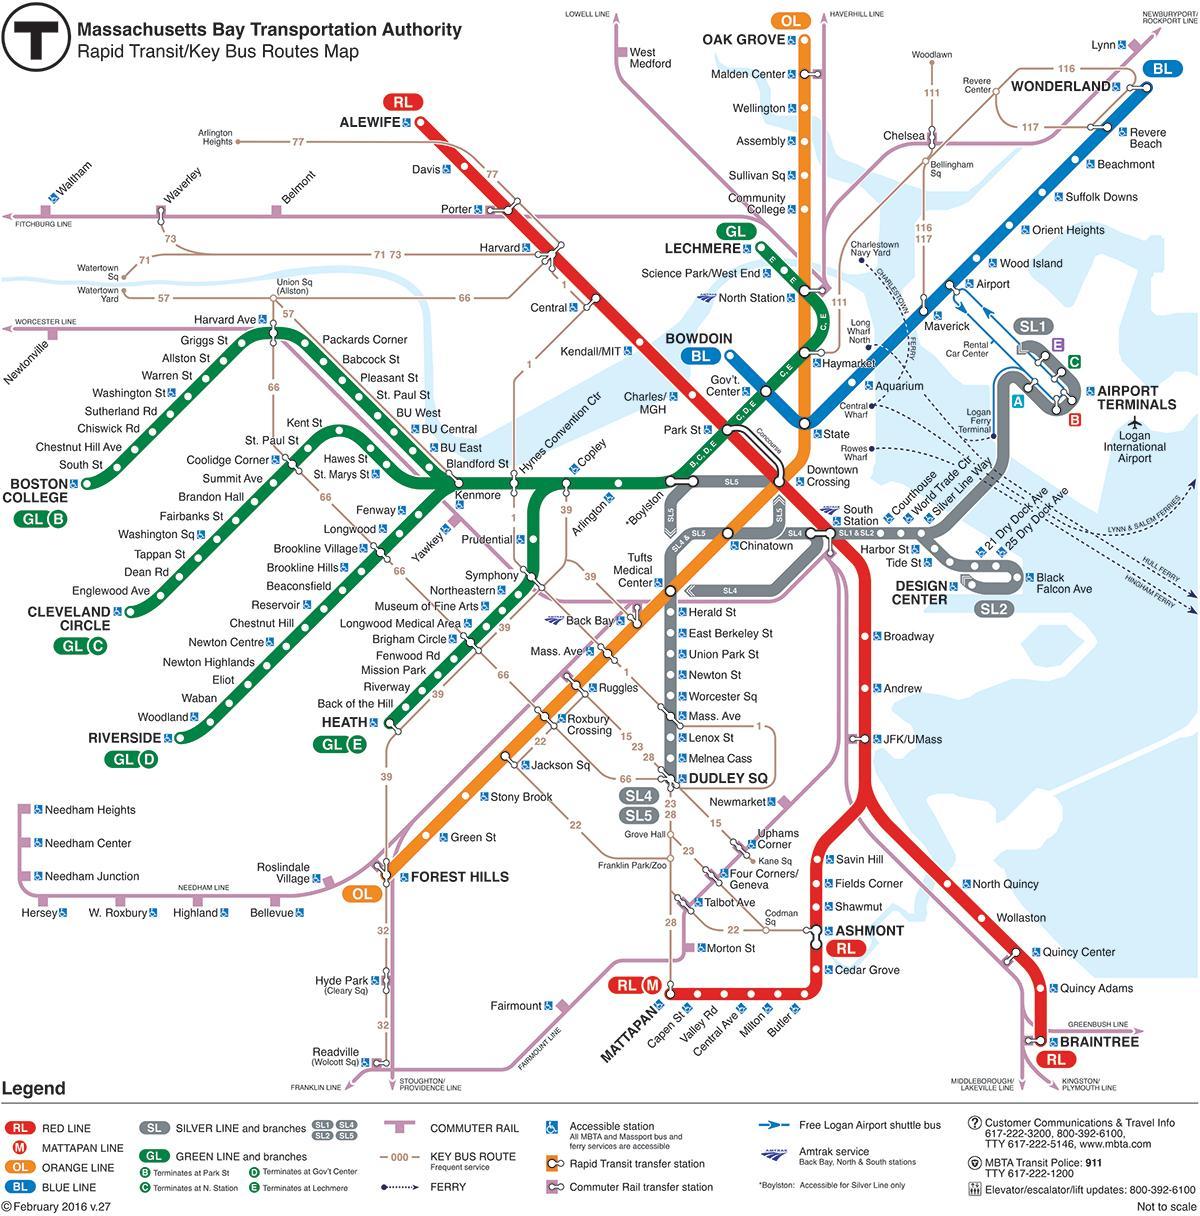 MBTA地図の赤線